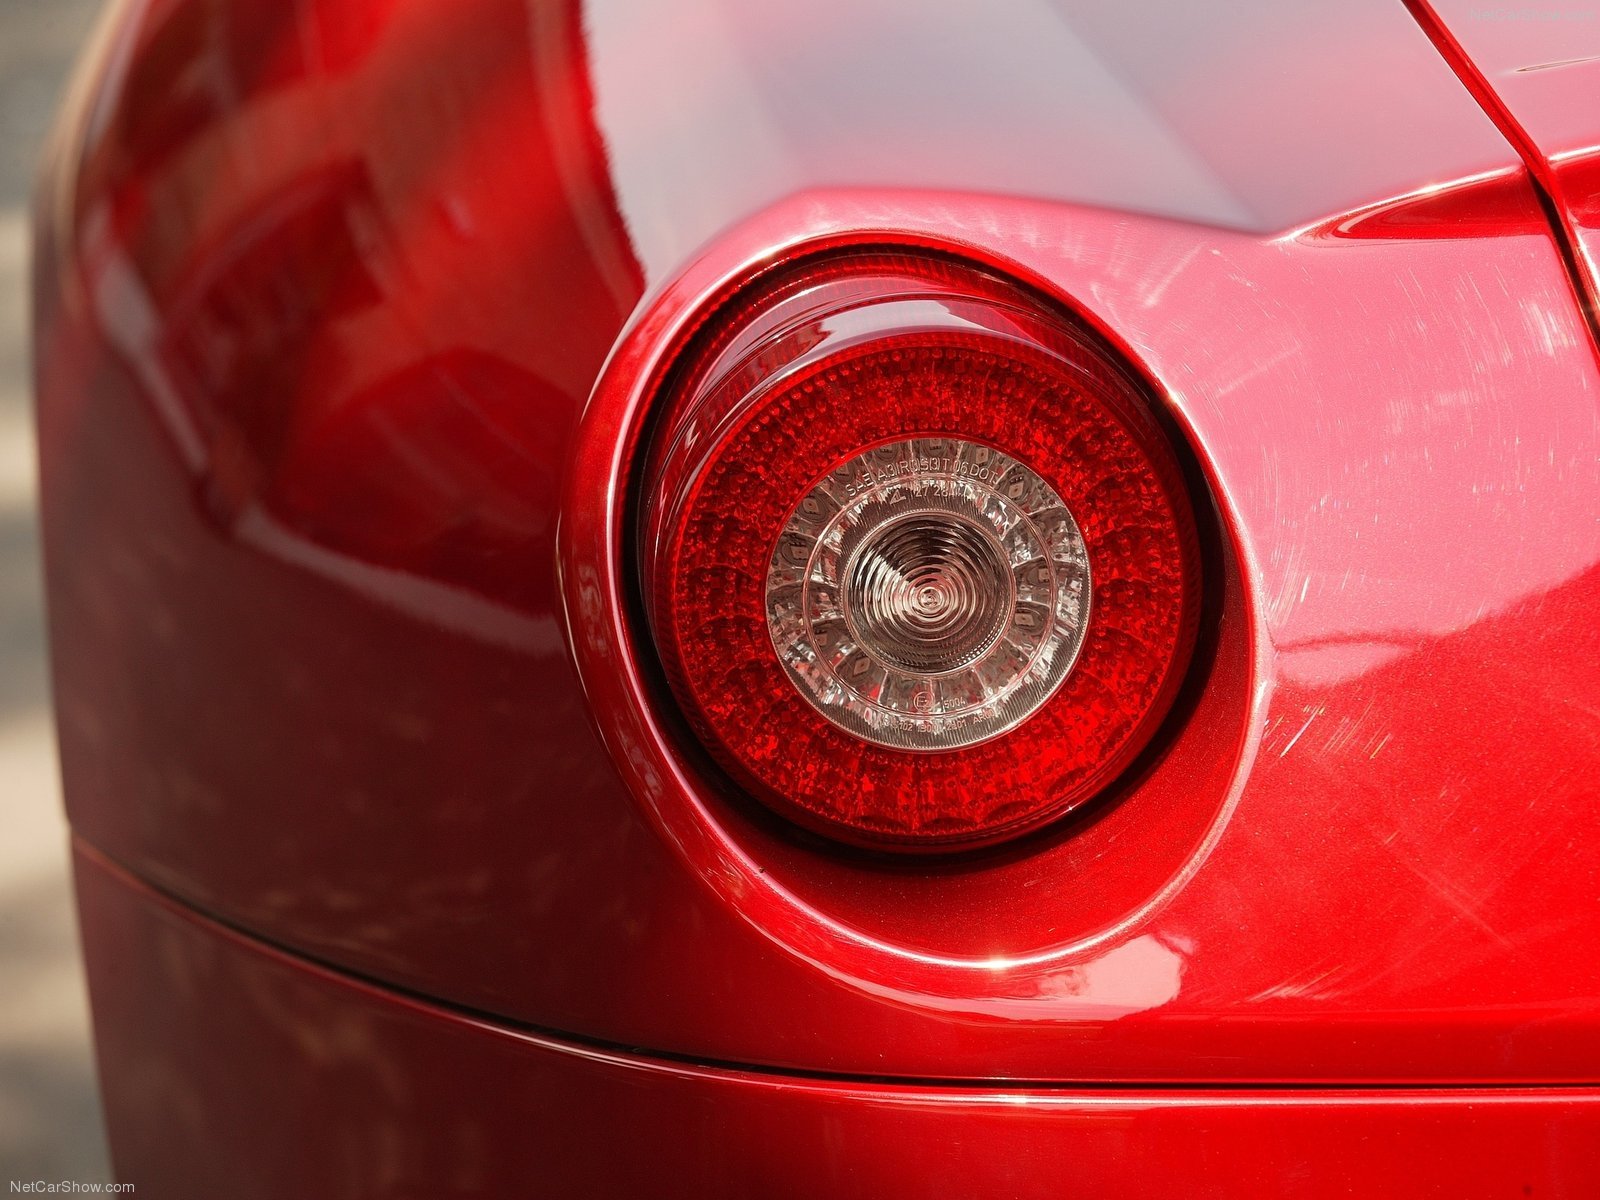 Best Ferrari 599 GTO/GTB wallpaper ID:73174 for High Resolution hd 1600x1200 computer